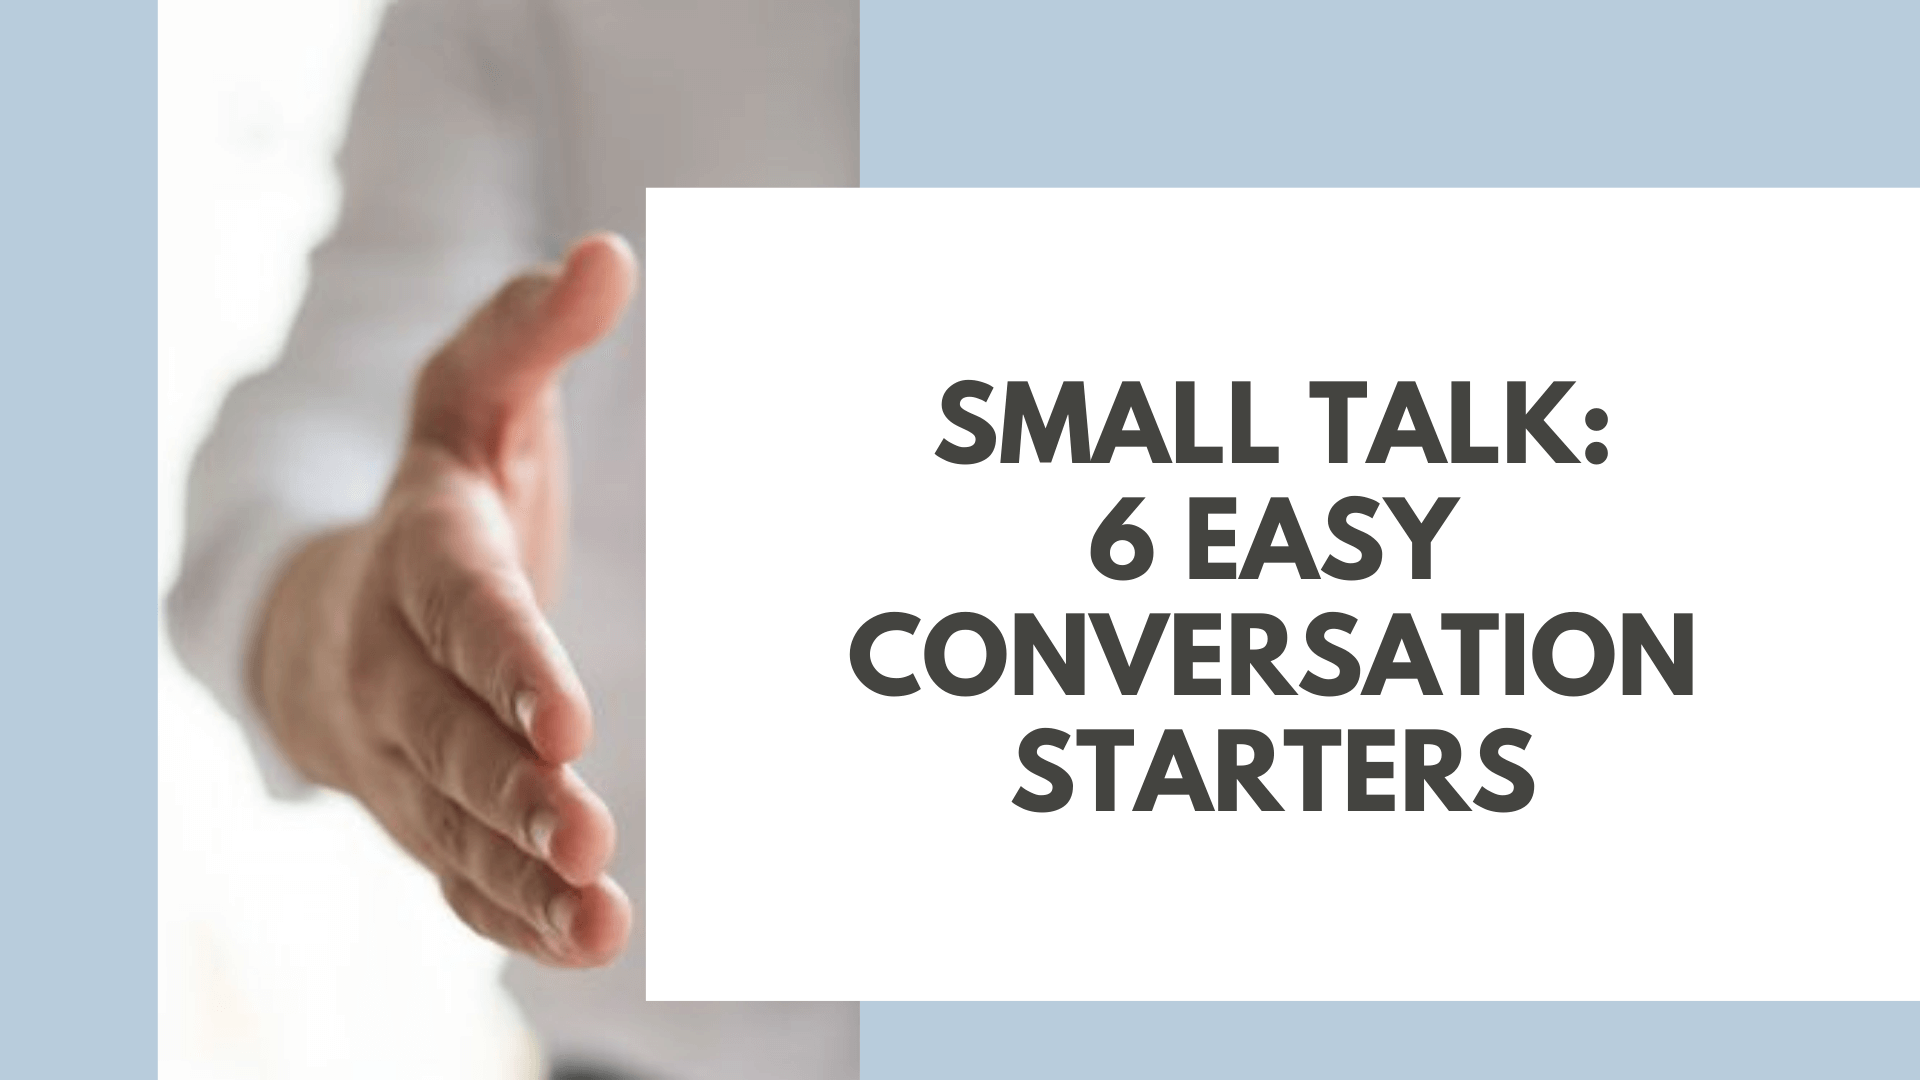 Small Talk: 6 Easy Conversation Starters